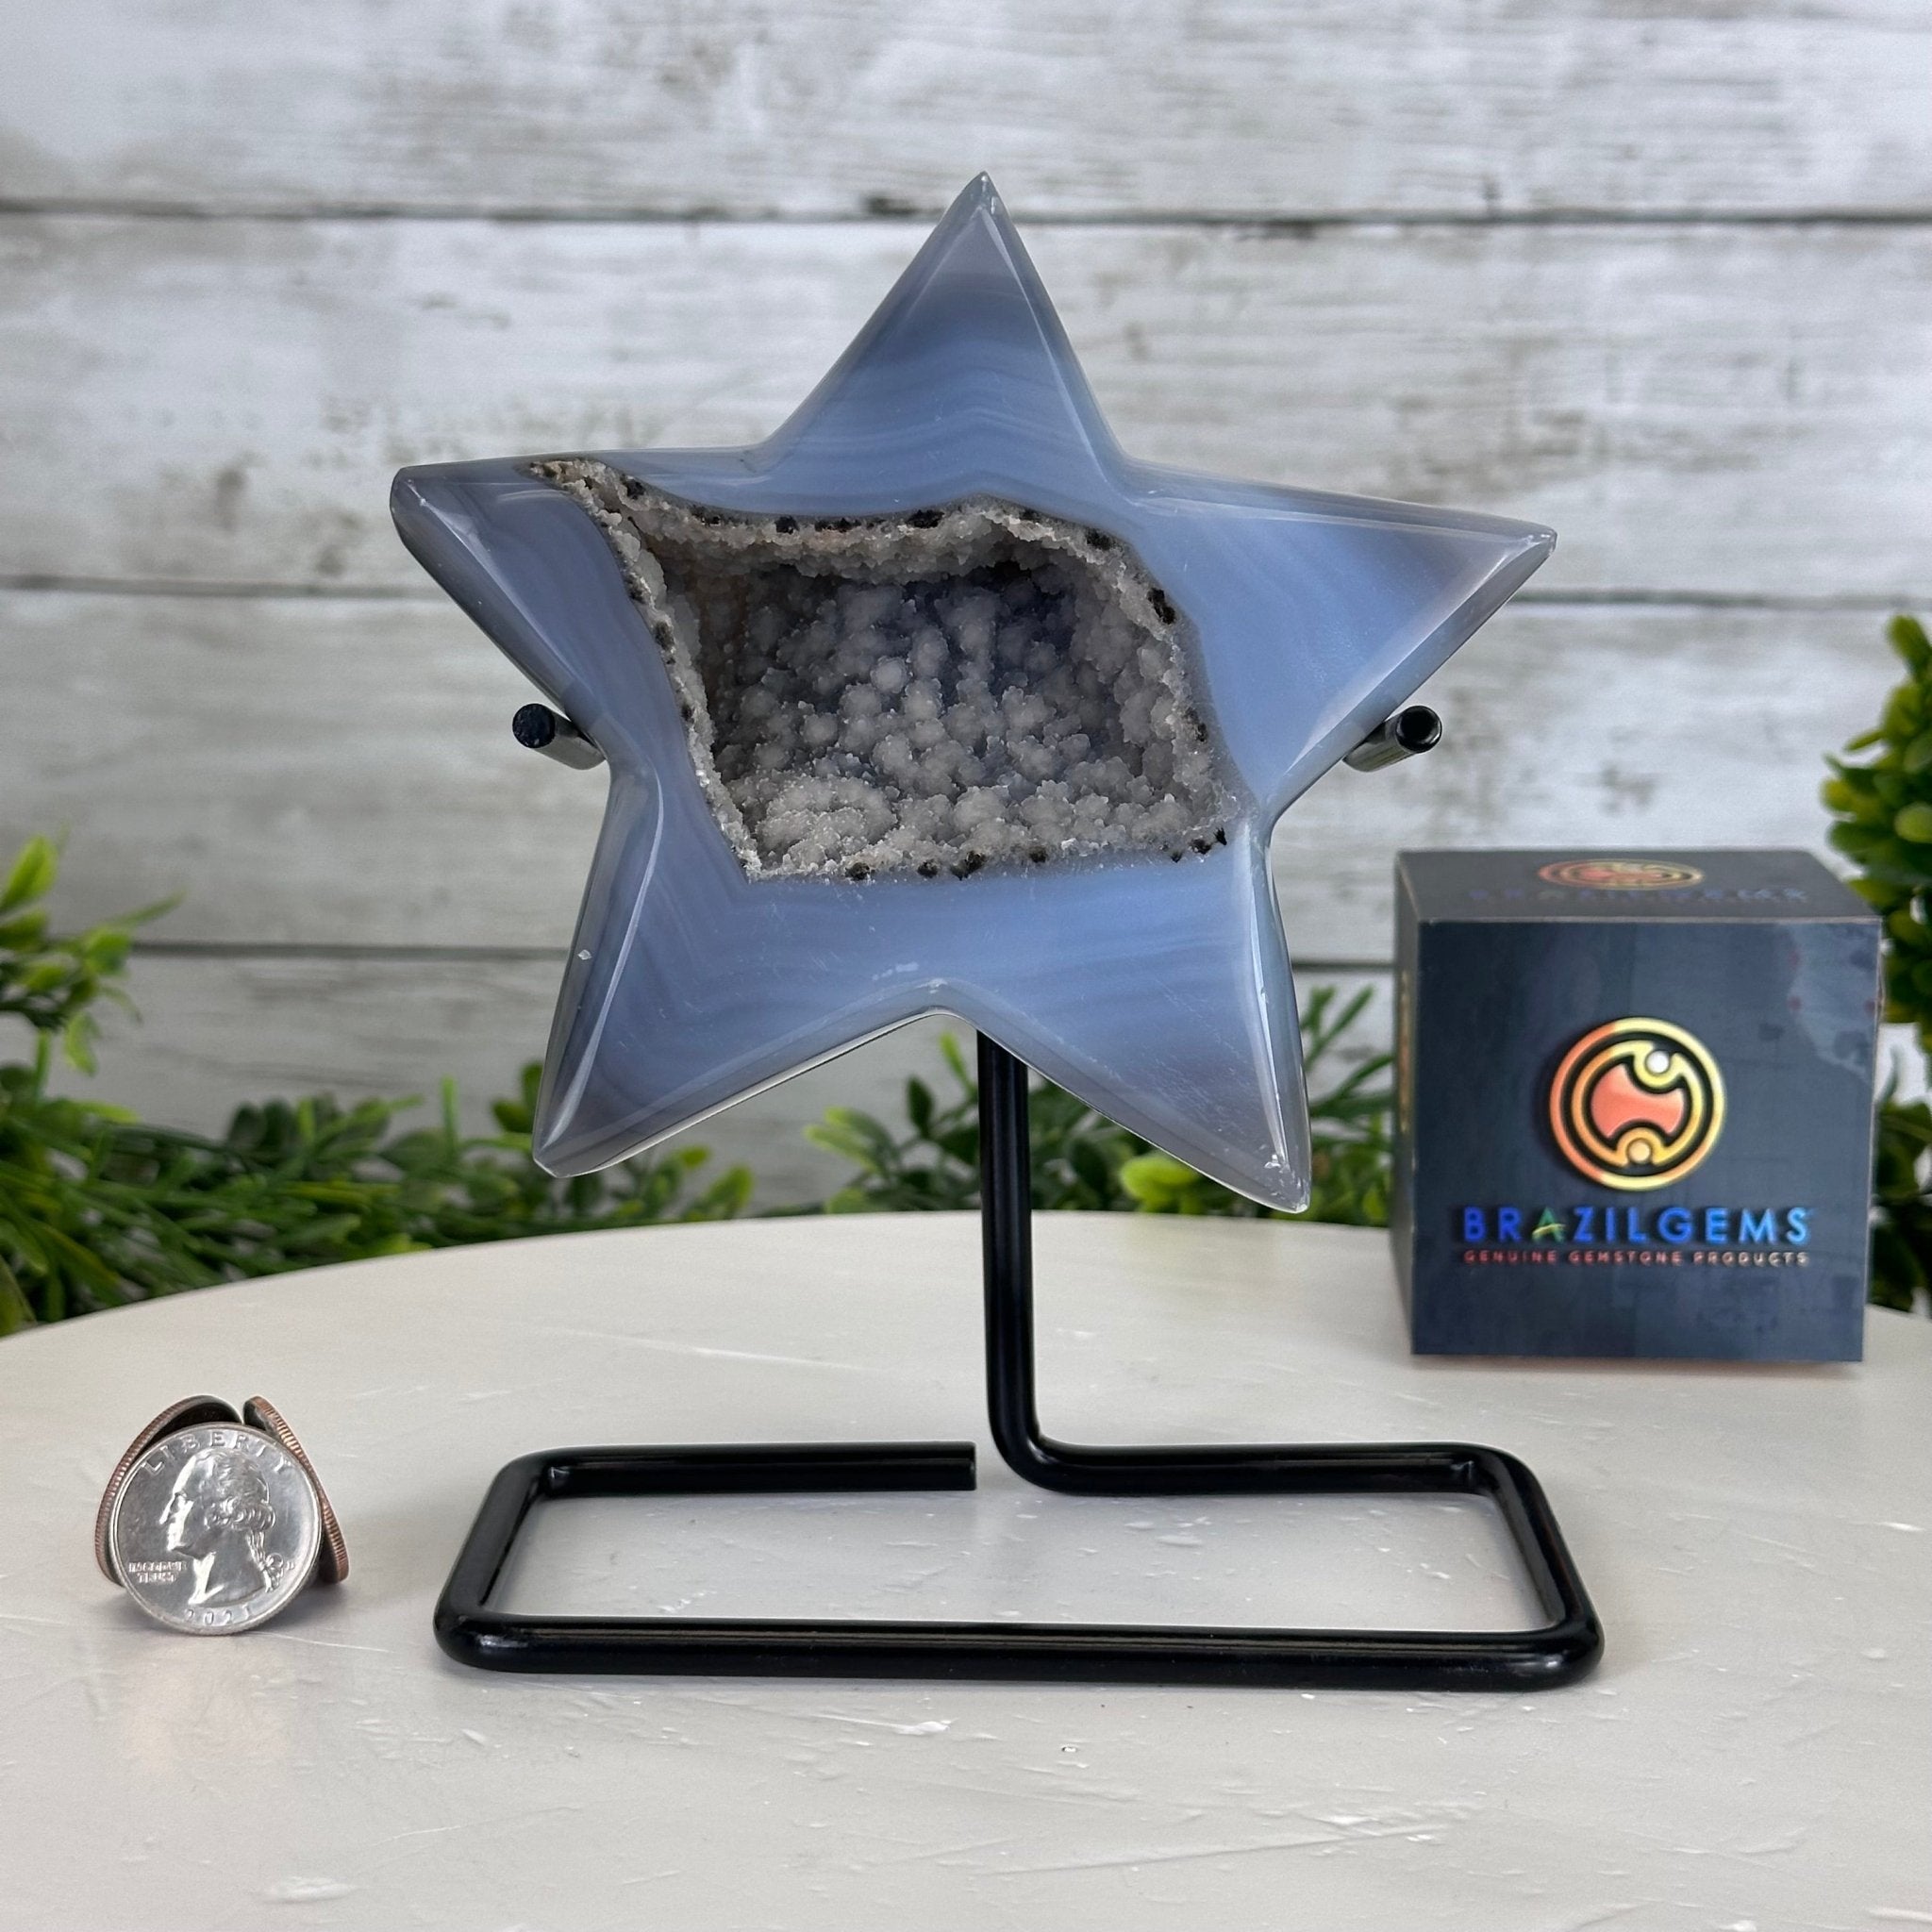 Polished Agate Star on a Metal Stand, 1.7 lbs & 6.6" Tall #5273-0007 - Brazil GemsBrazil GemsPolished Agate Star on a Metal Stand, 1.7 lbs & 6.6" Tall #5273-0007Stars5273-0007